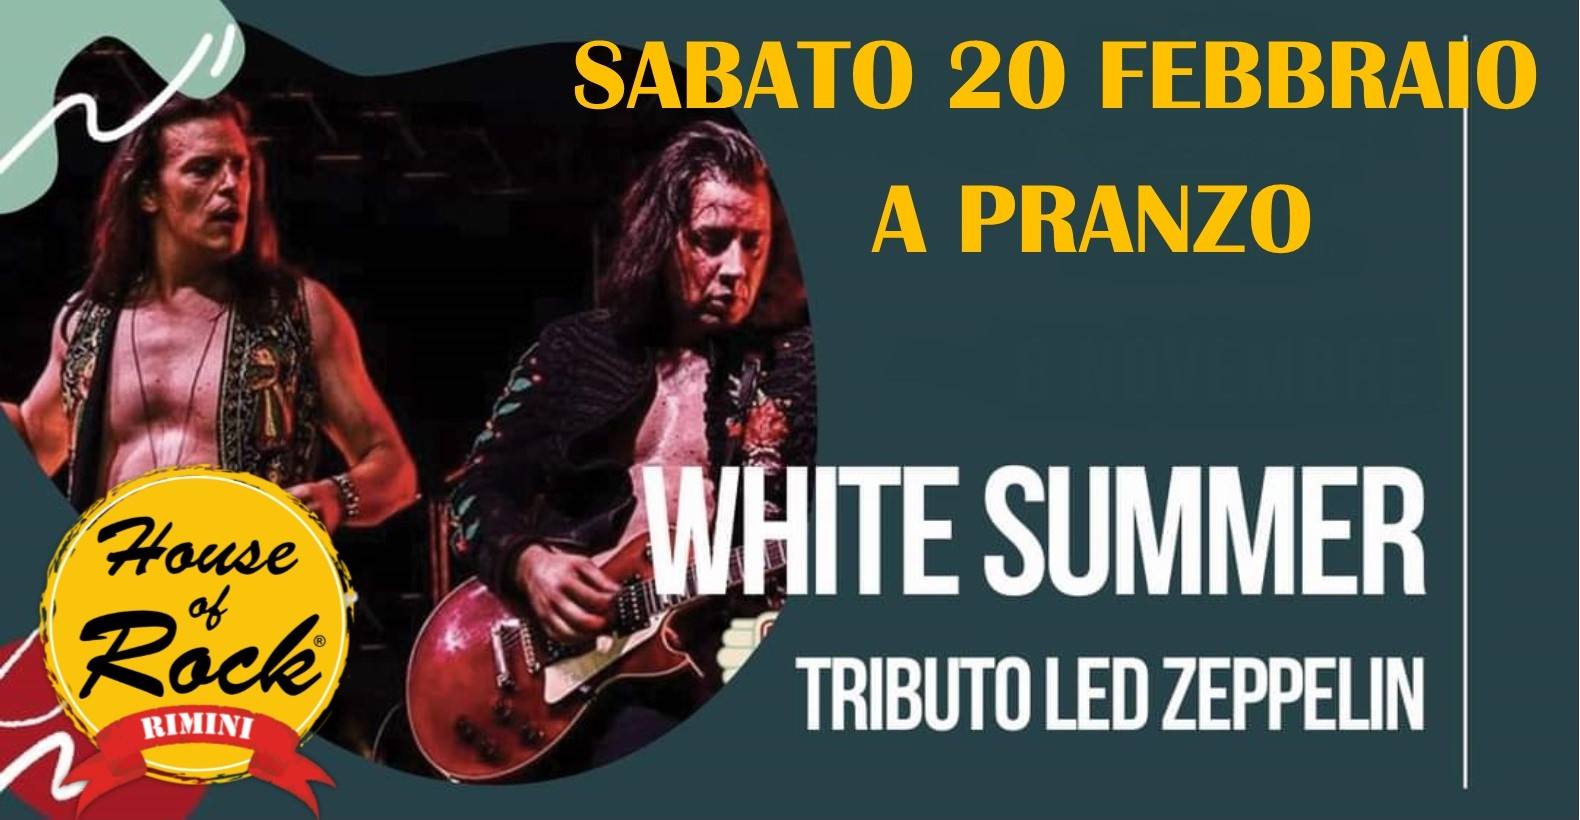 Led Zeppelin tribute House of Rock di Rimini